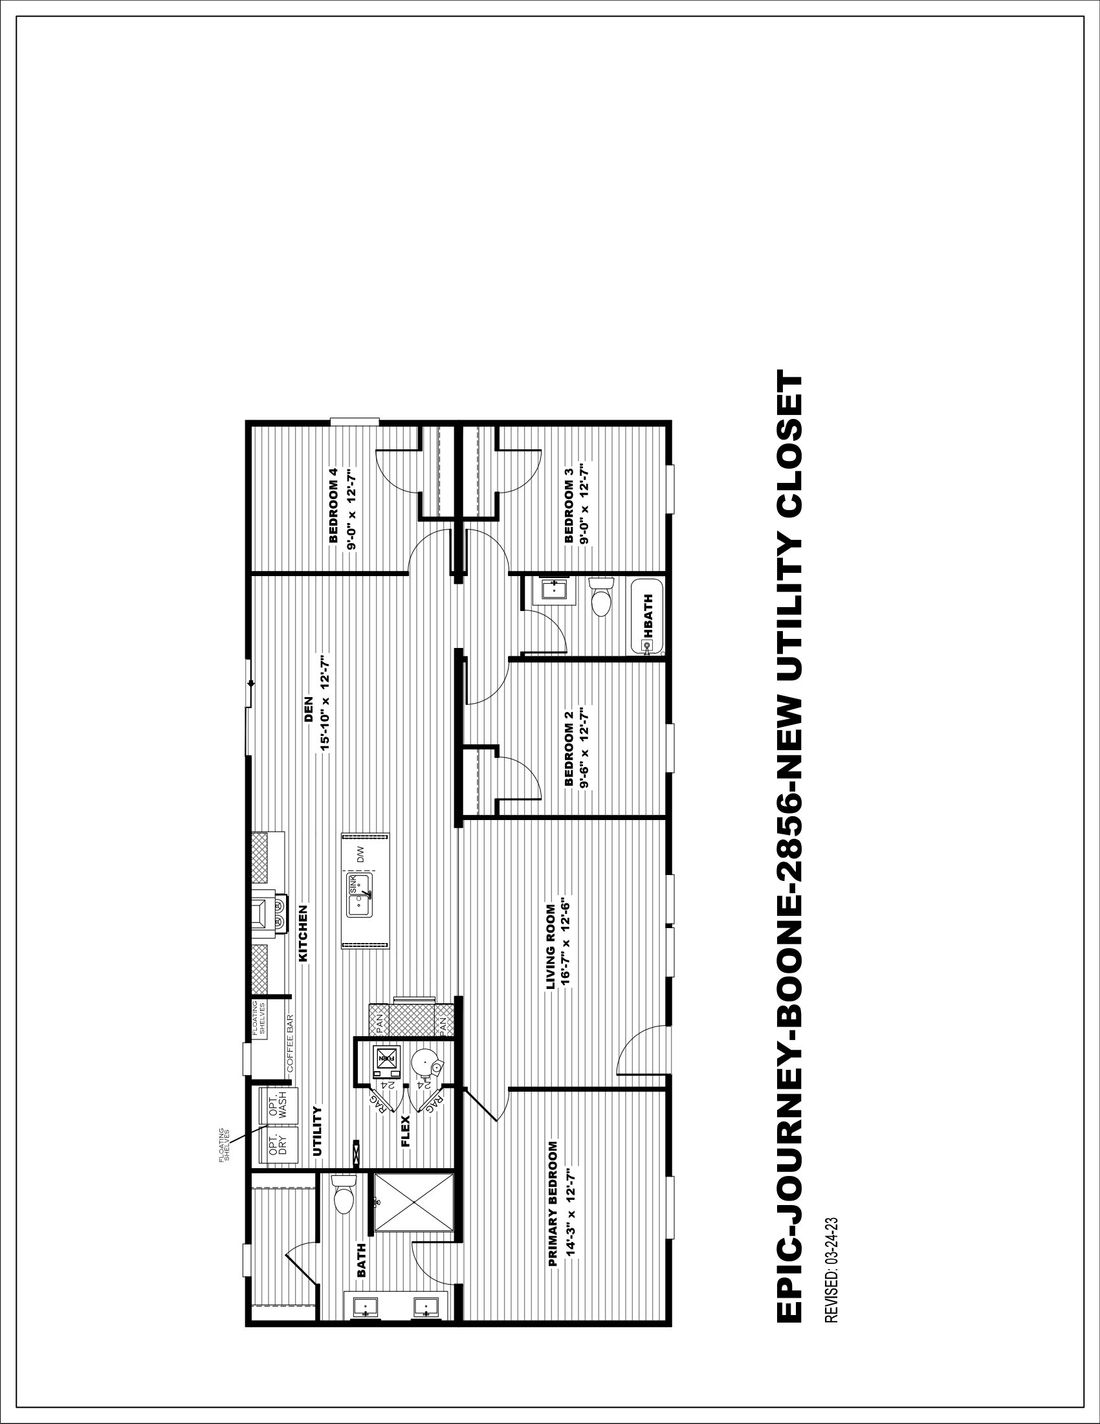 The BOONE 5628-1156 Floor Plan